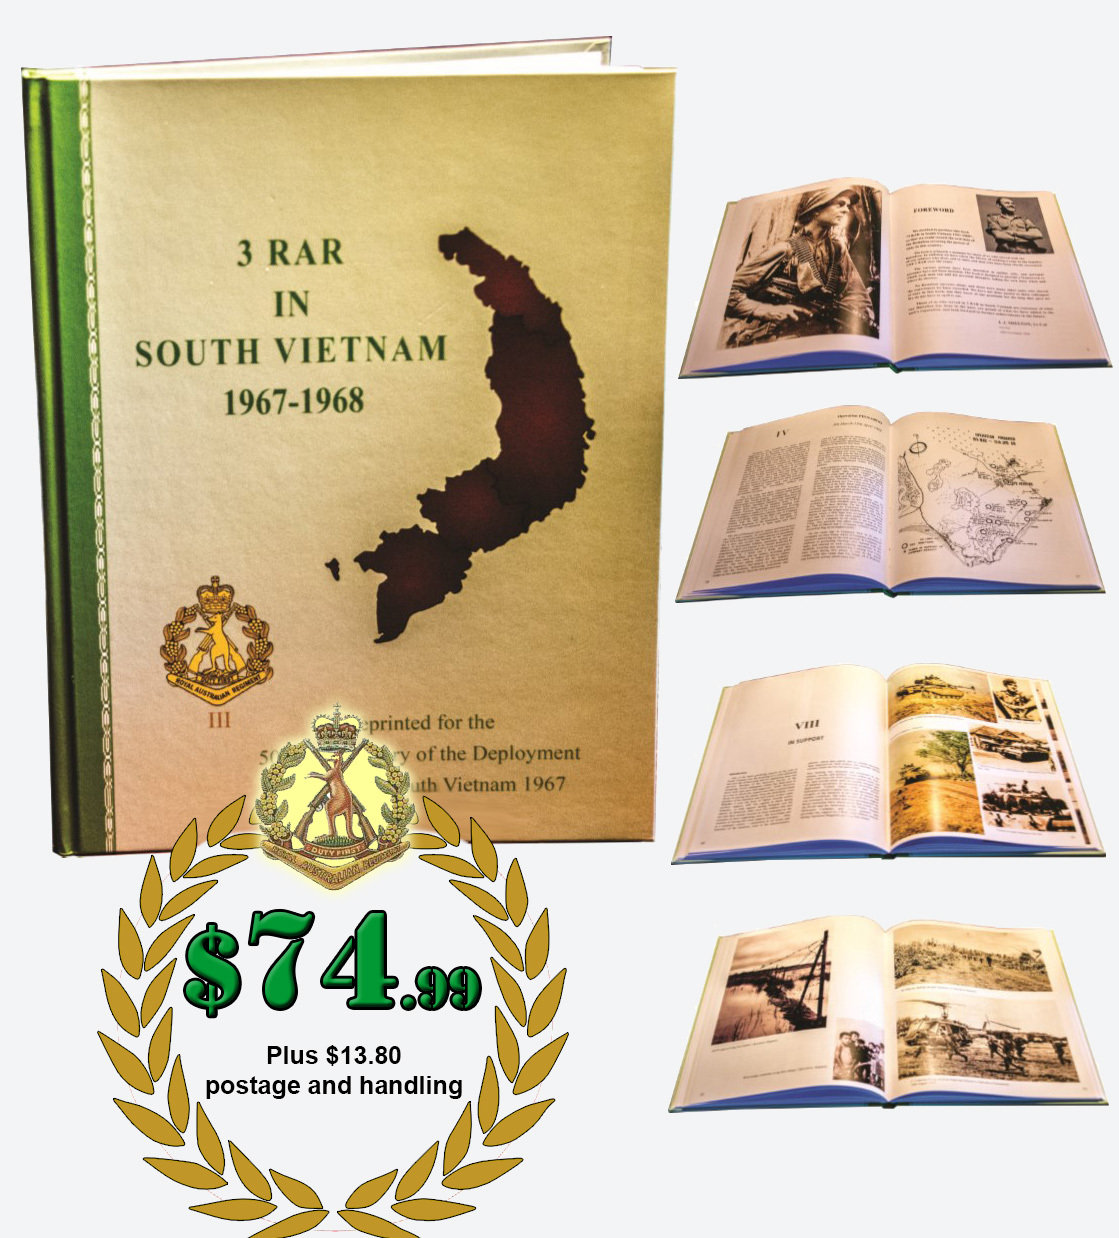 3 RAR IN SOUTH VIETNAM 1967-1968